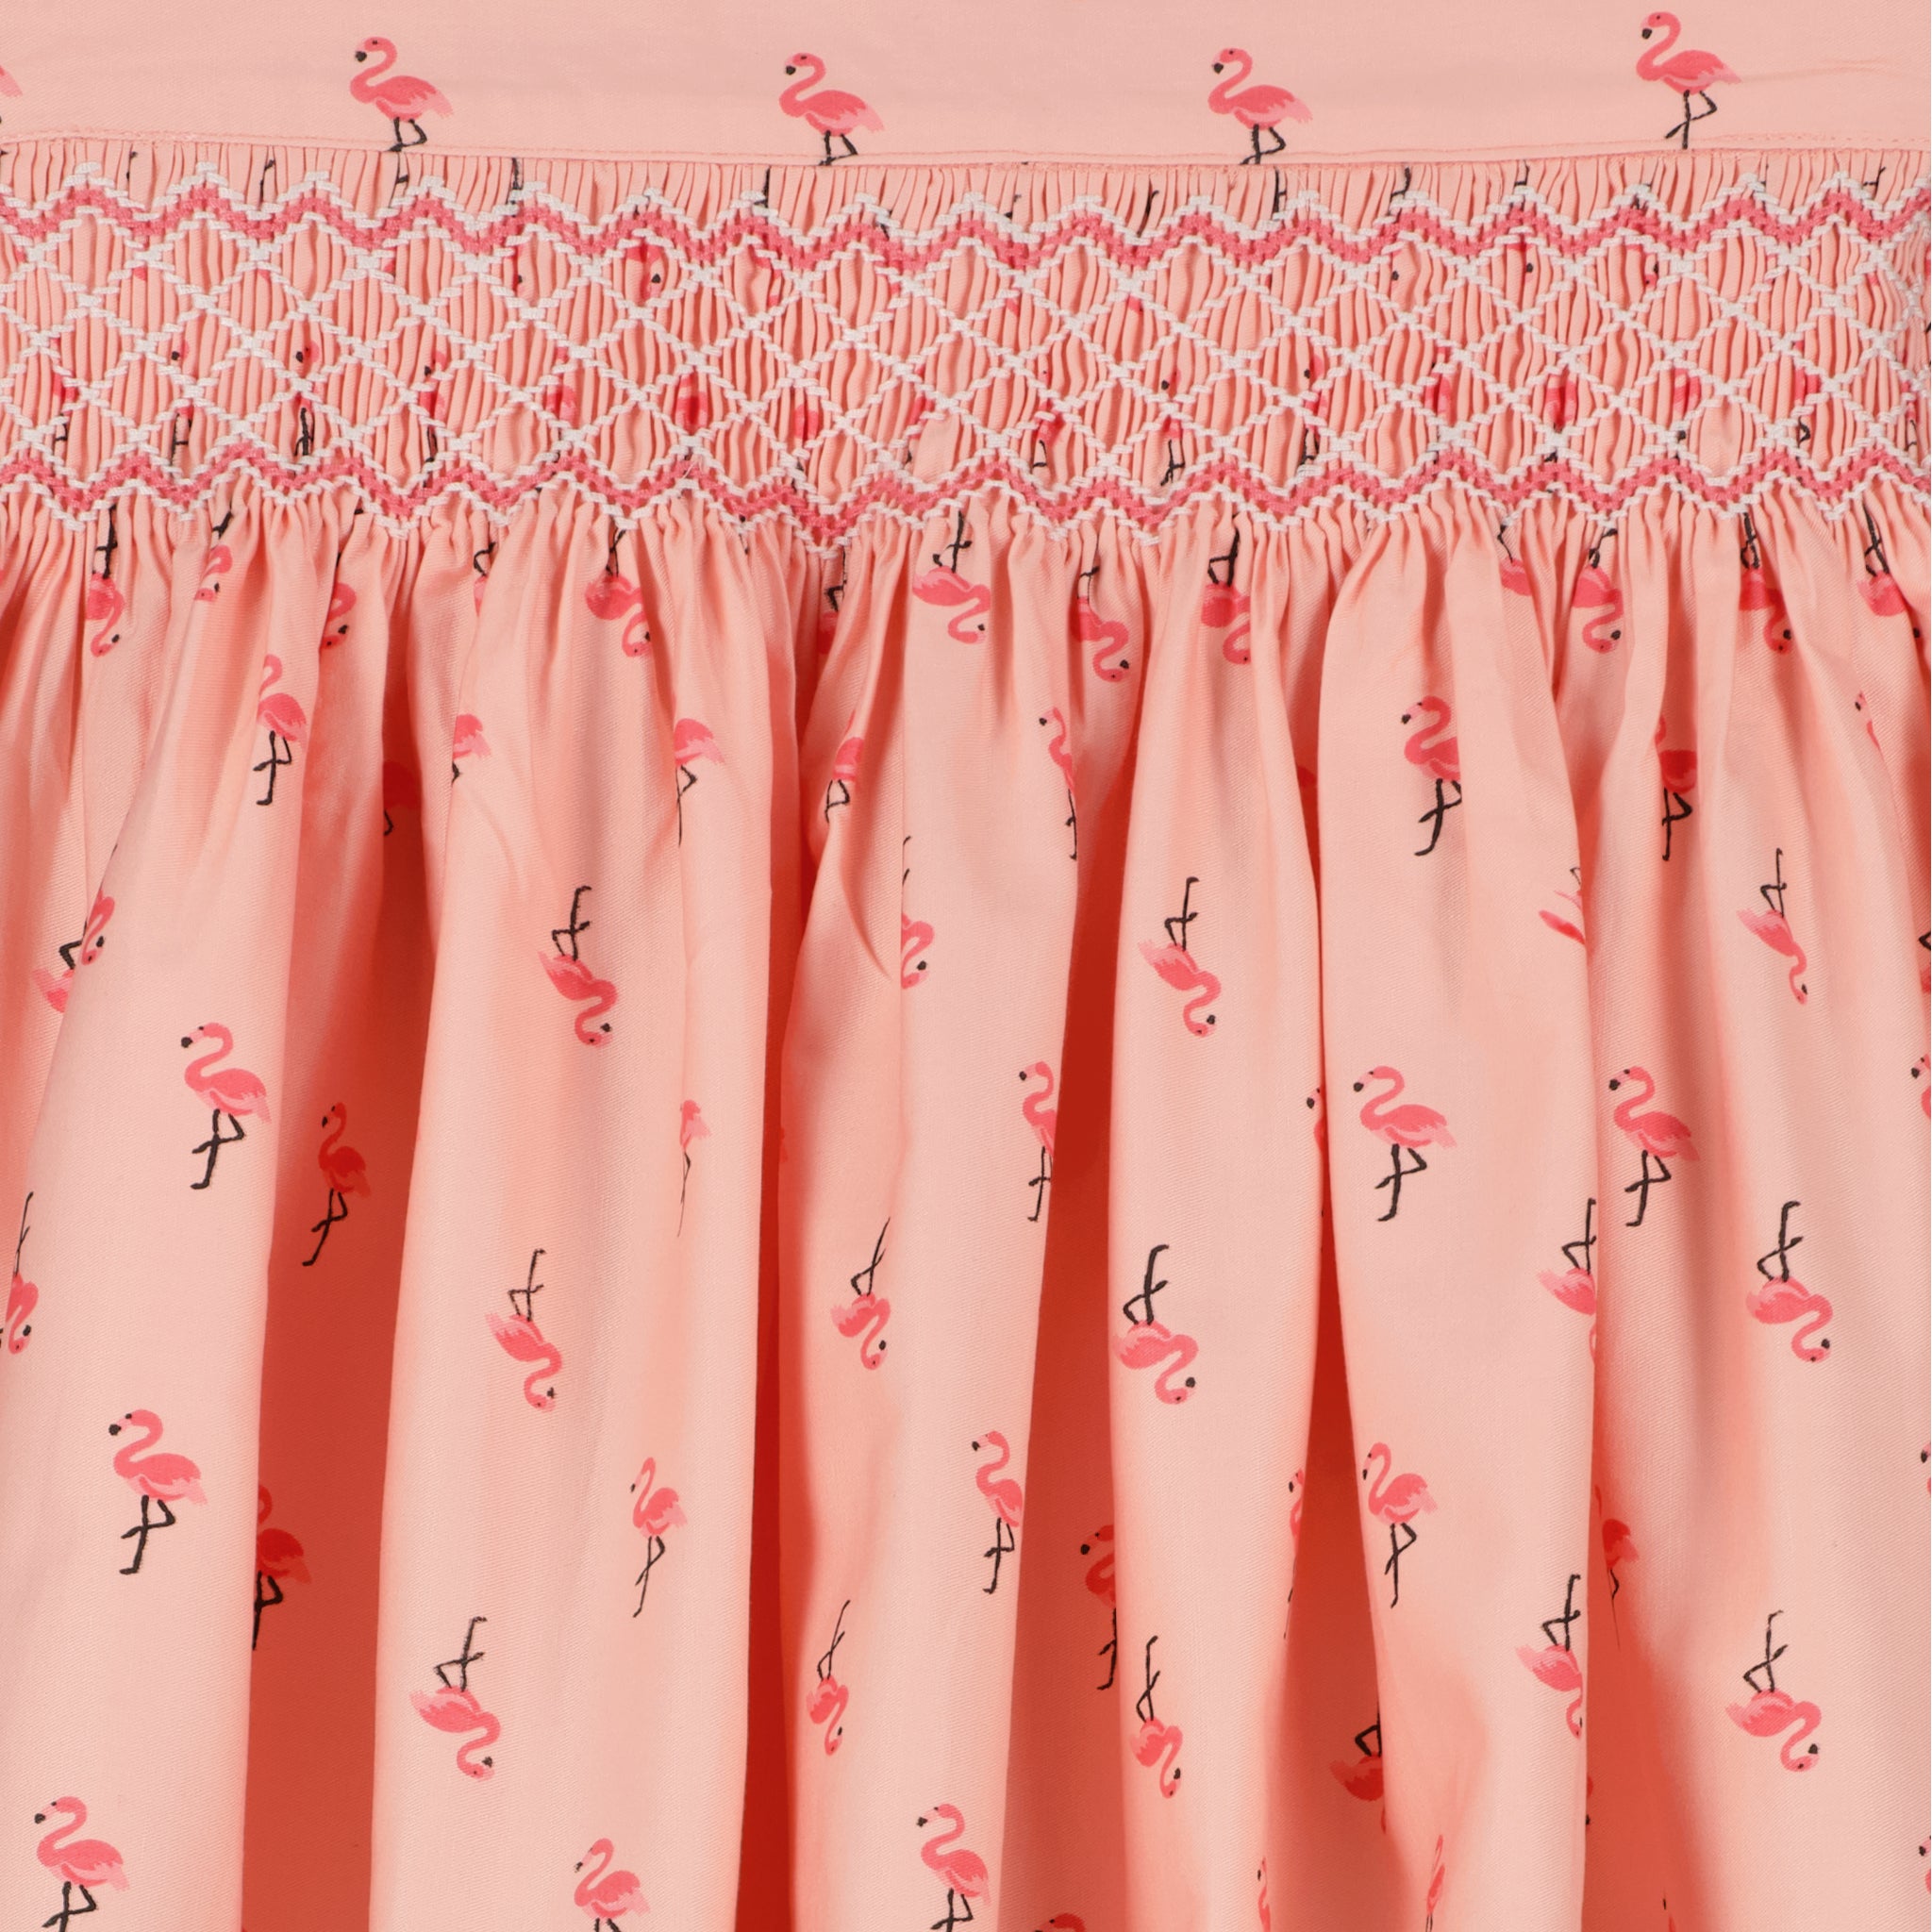 orange flamingo print skirt for girls, close up